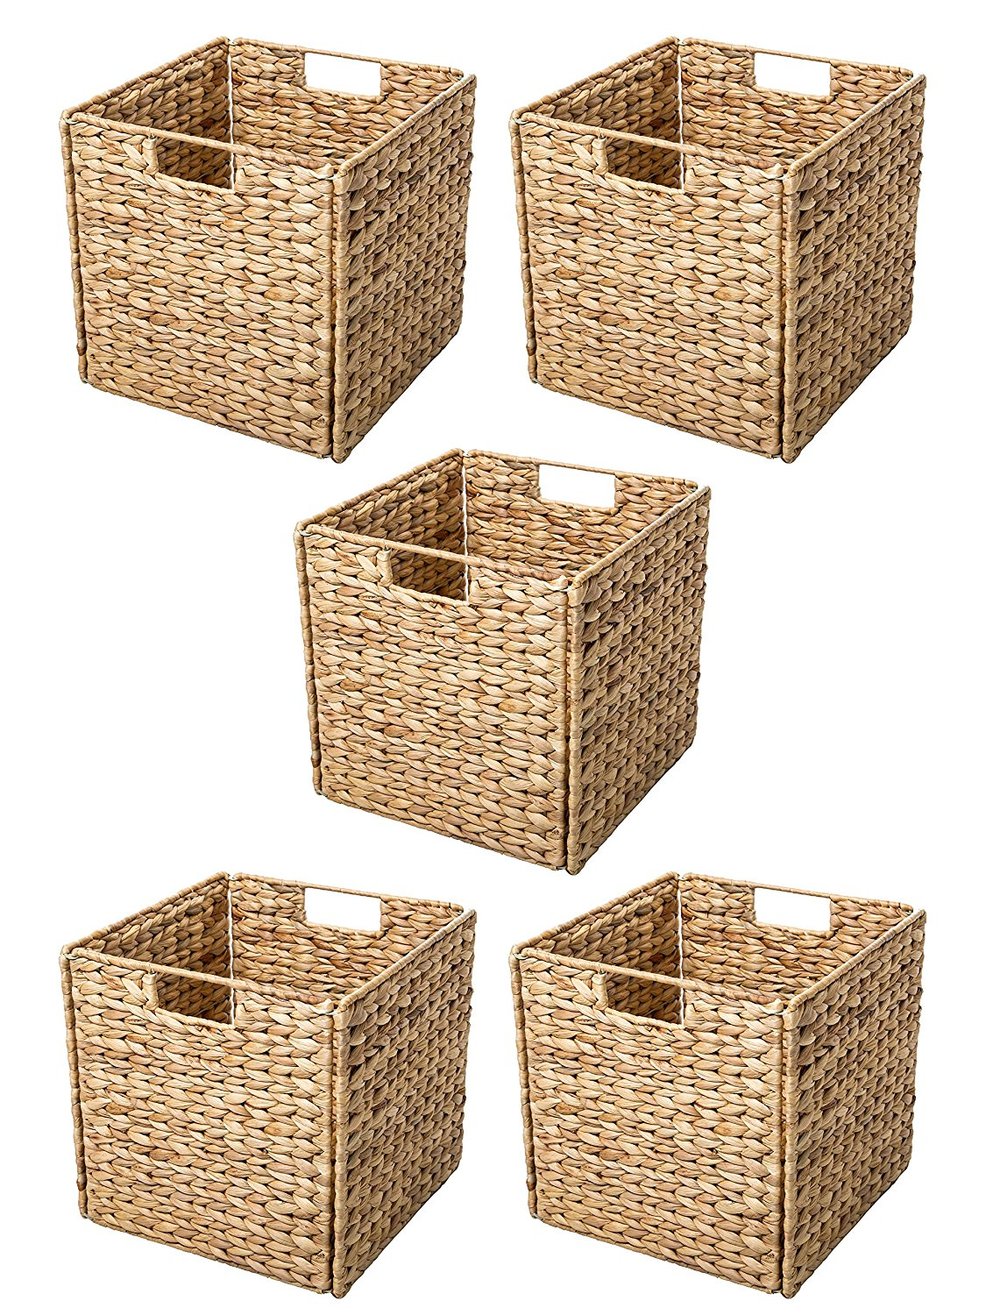 baskets.jpg